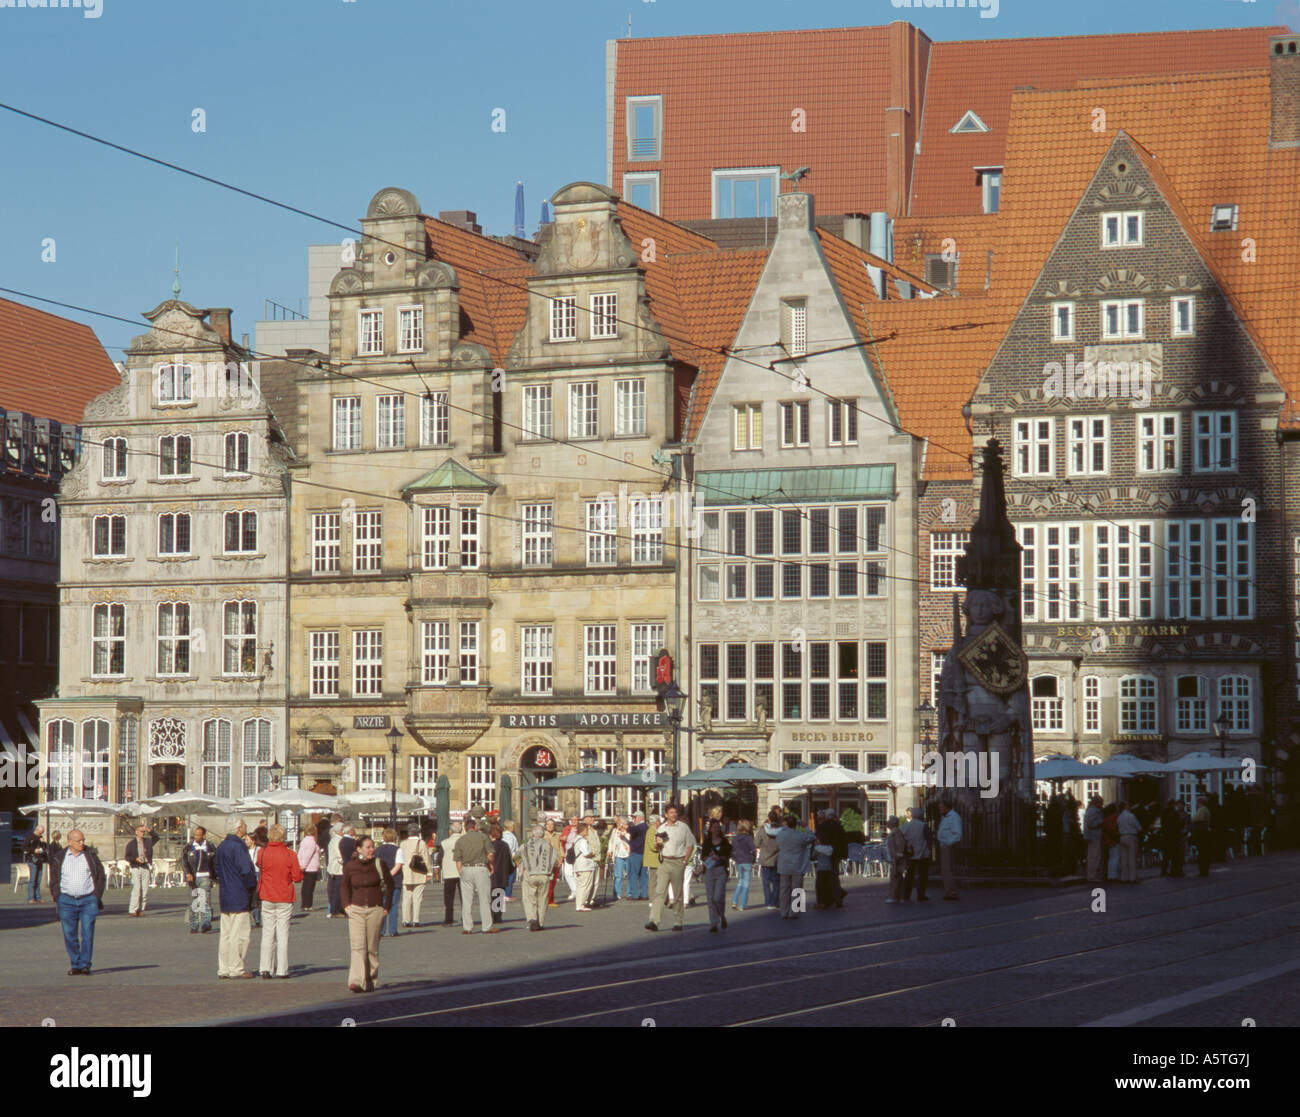 Old patrician houses seen over Marktplatz (Market Place), City of Bremen, Bremen, Germany. Stock Photo